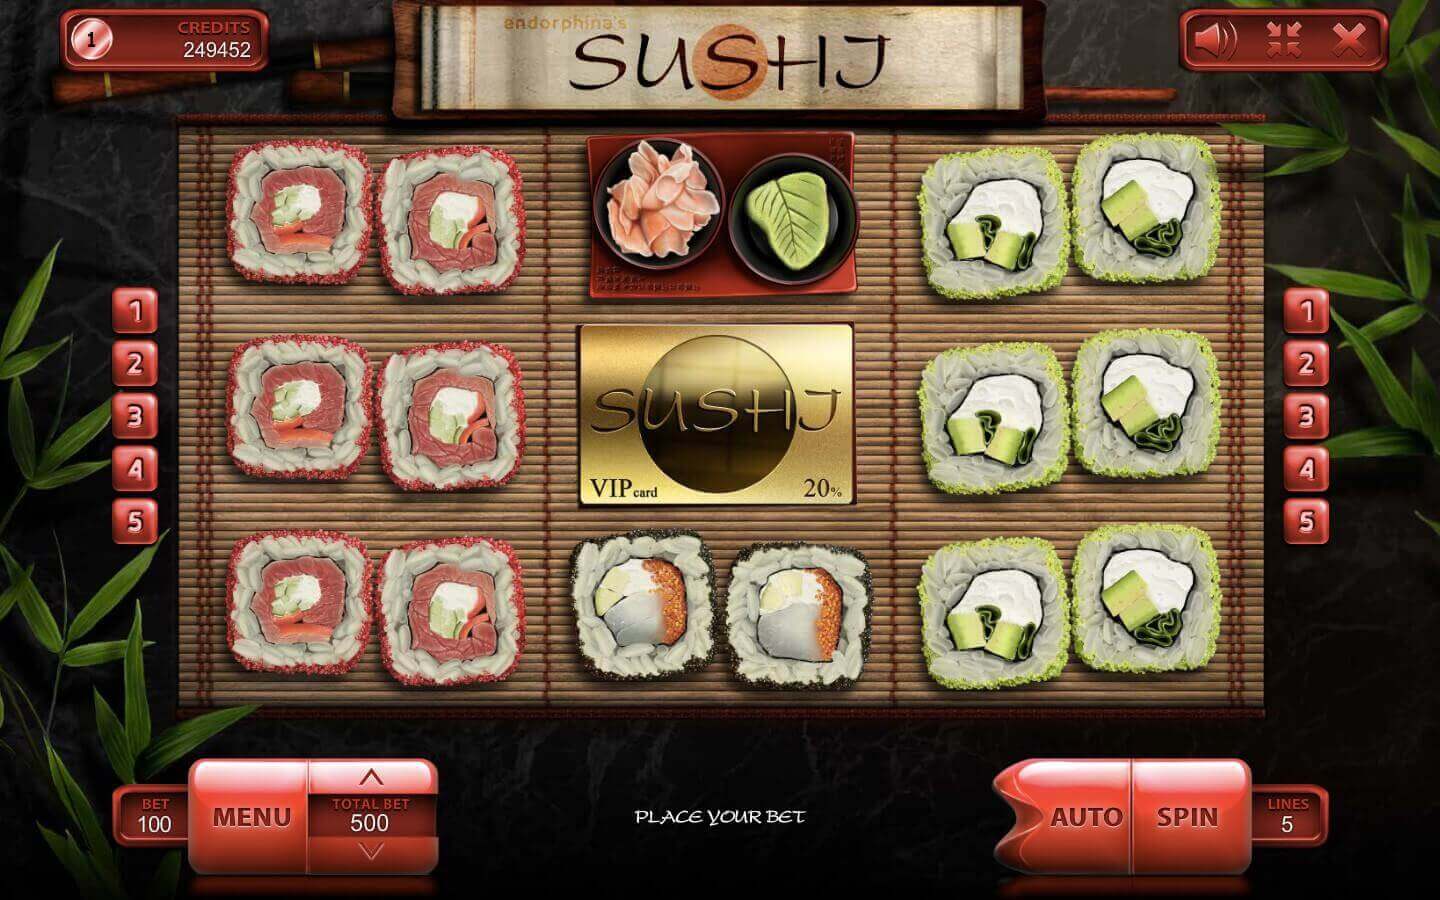 Sushi Spel proces